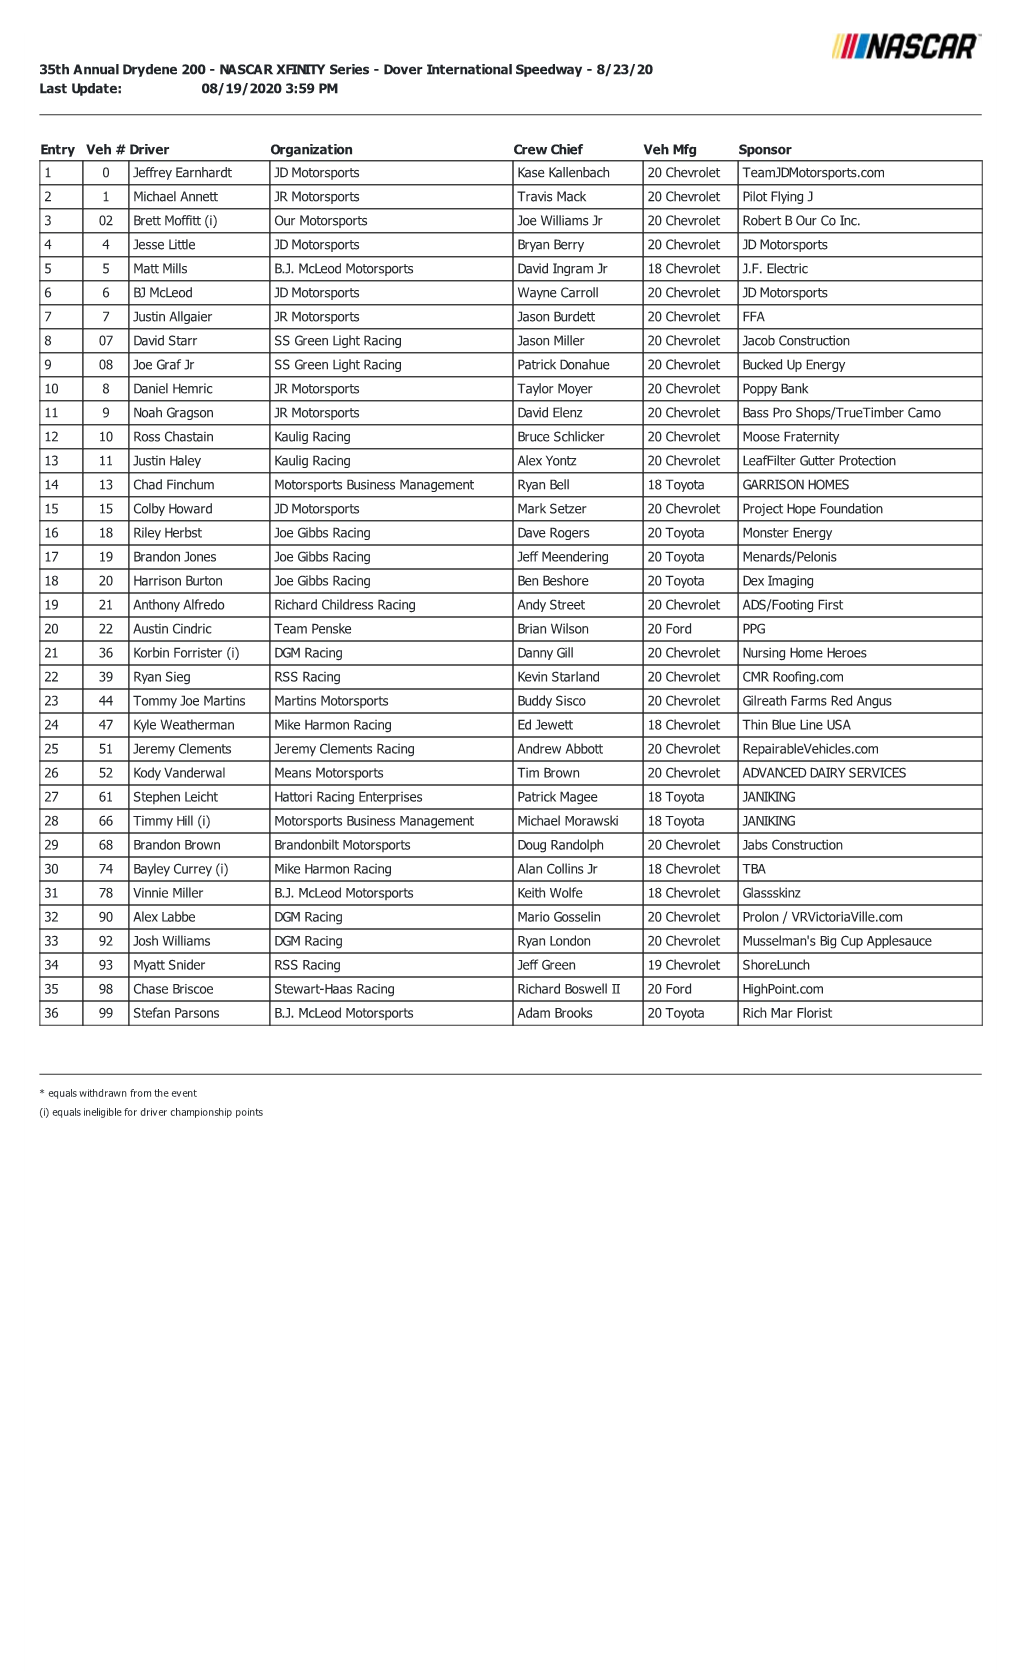 35Th Annual Drydene 200 - NASCAR XFINITY Series - Dover International Speedway - 8/23/20 Last Update: 08/19/2020 3:59 PM